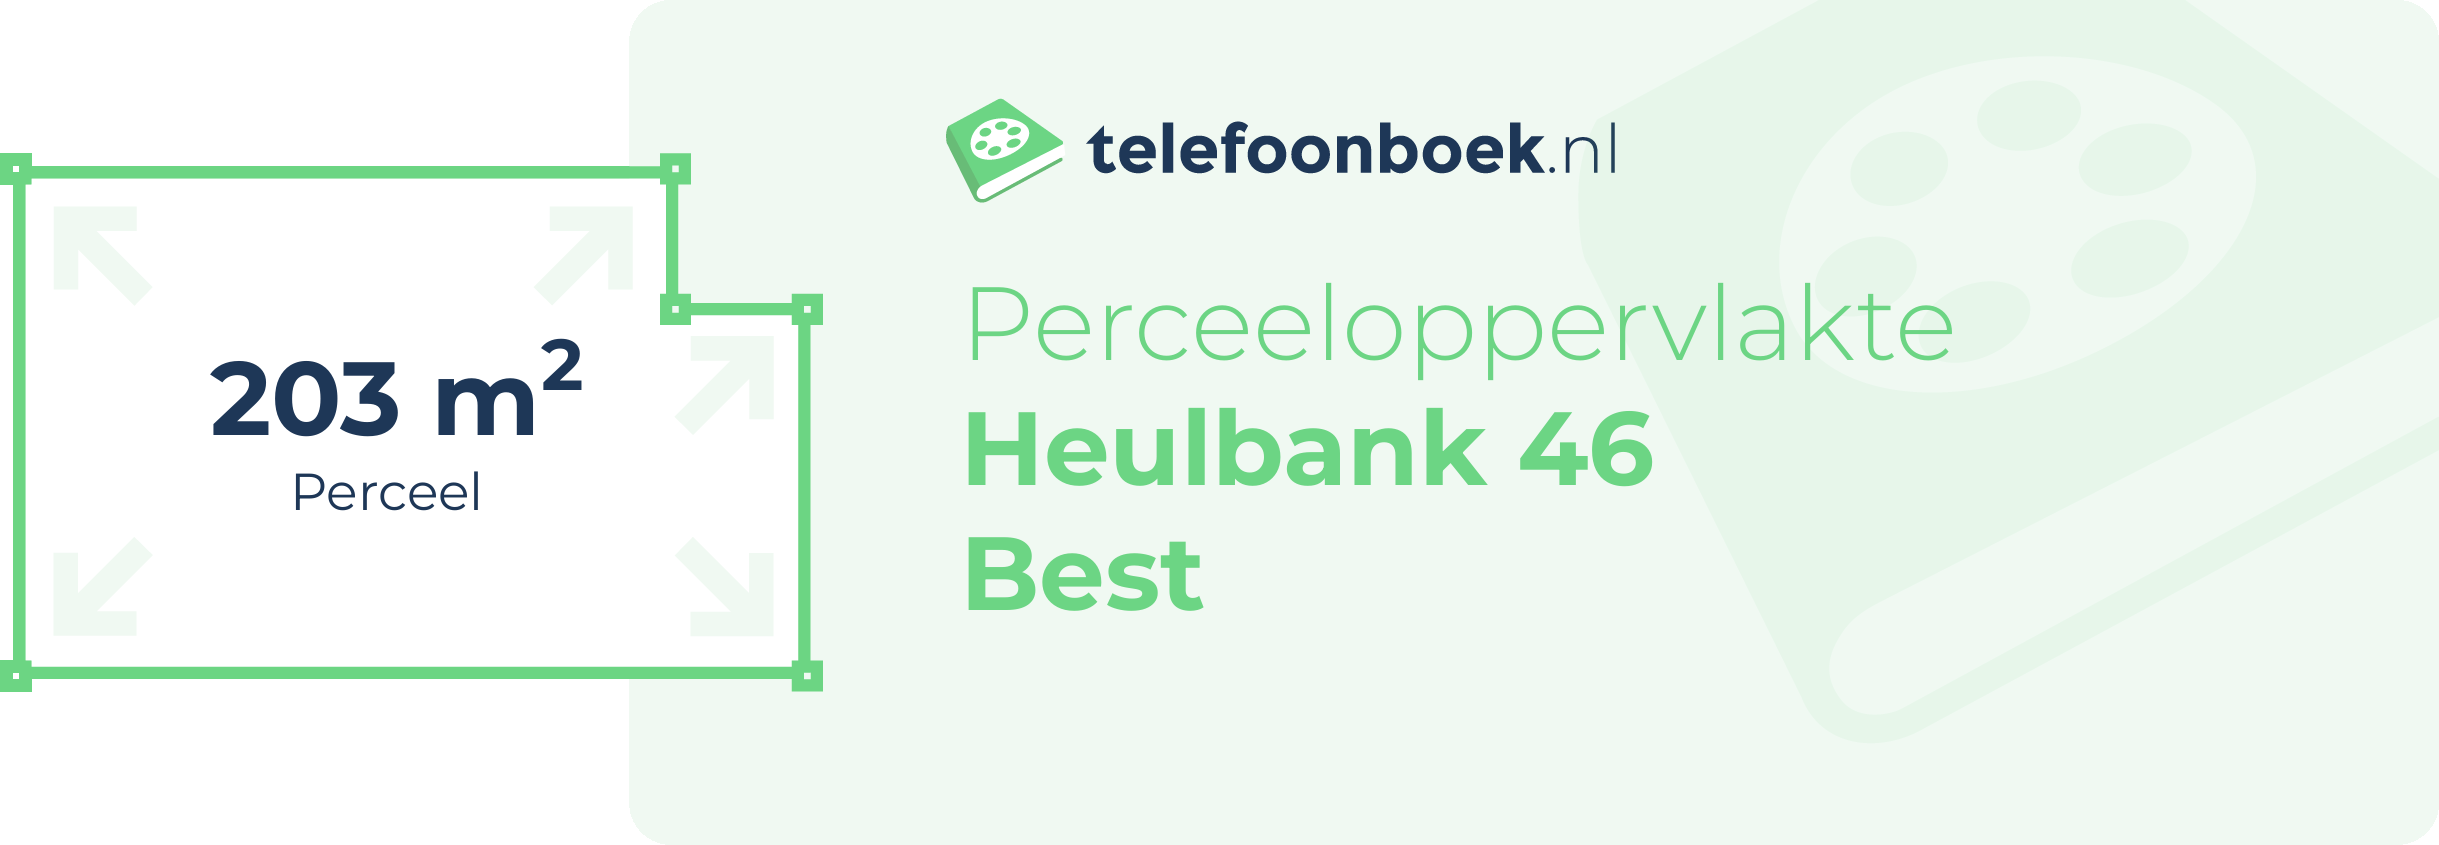 Perceeloppervlakte Heulbank 46 Best